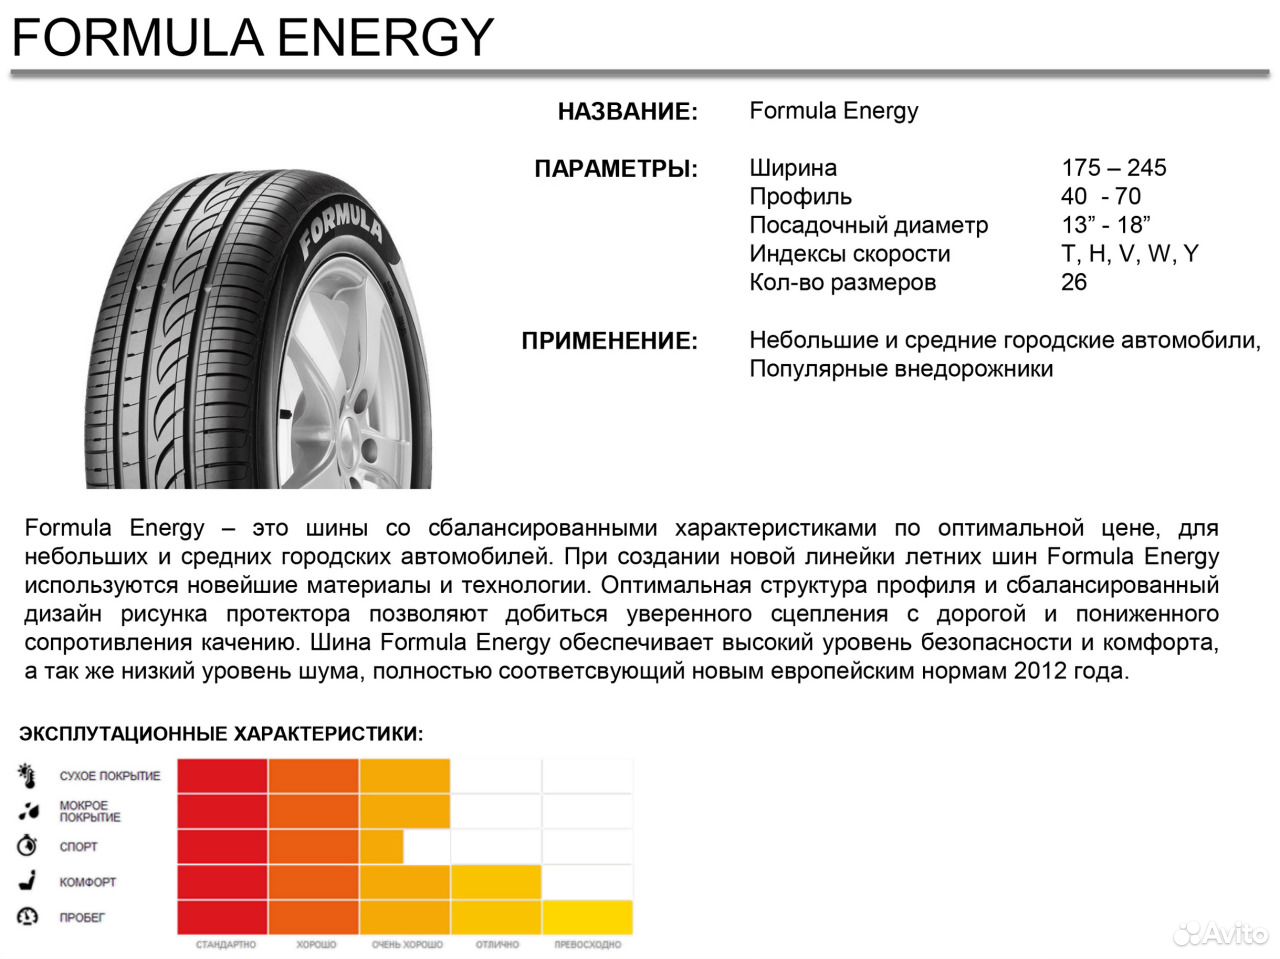 Формула 205 55 16 отзывы. Шина Formula 185/65 r15. Шина 195/65r15 Pirelli Formula Energy 91v. 185/65r15 92h XL Pirelli Formula Energy. Шины формула Энерджи 185/65 r15.